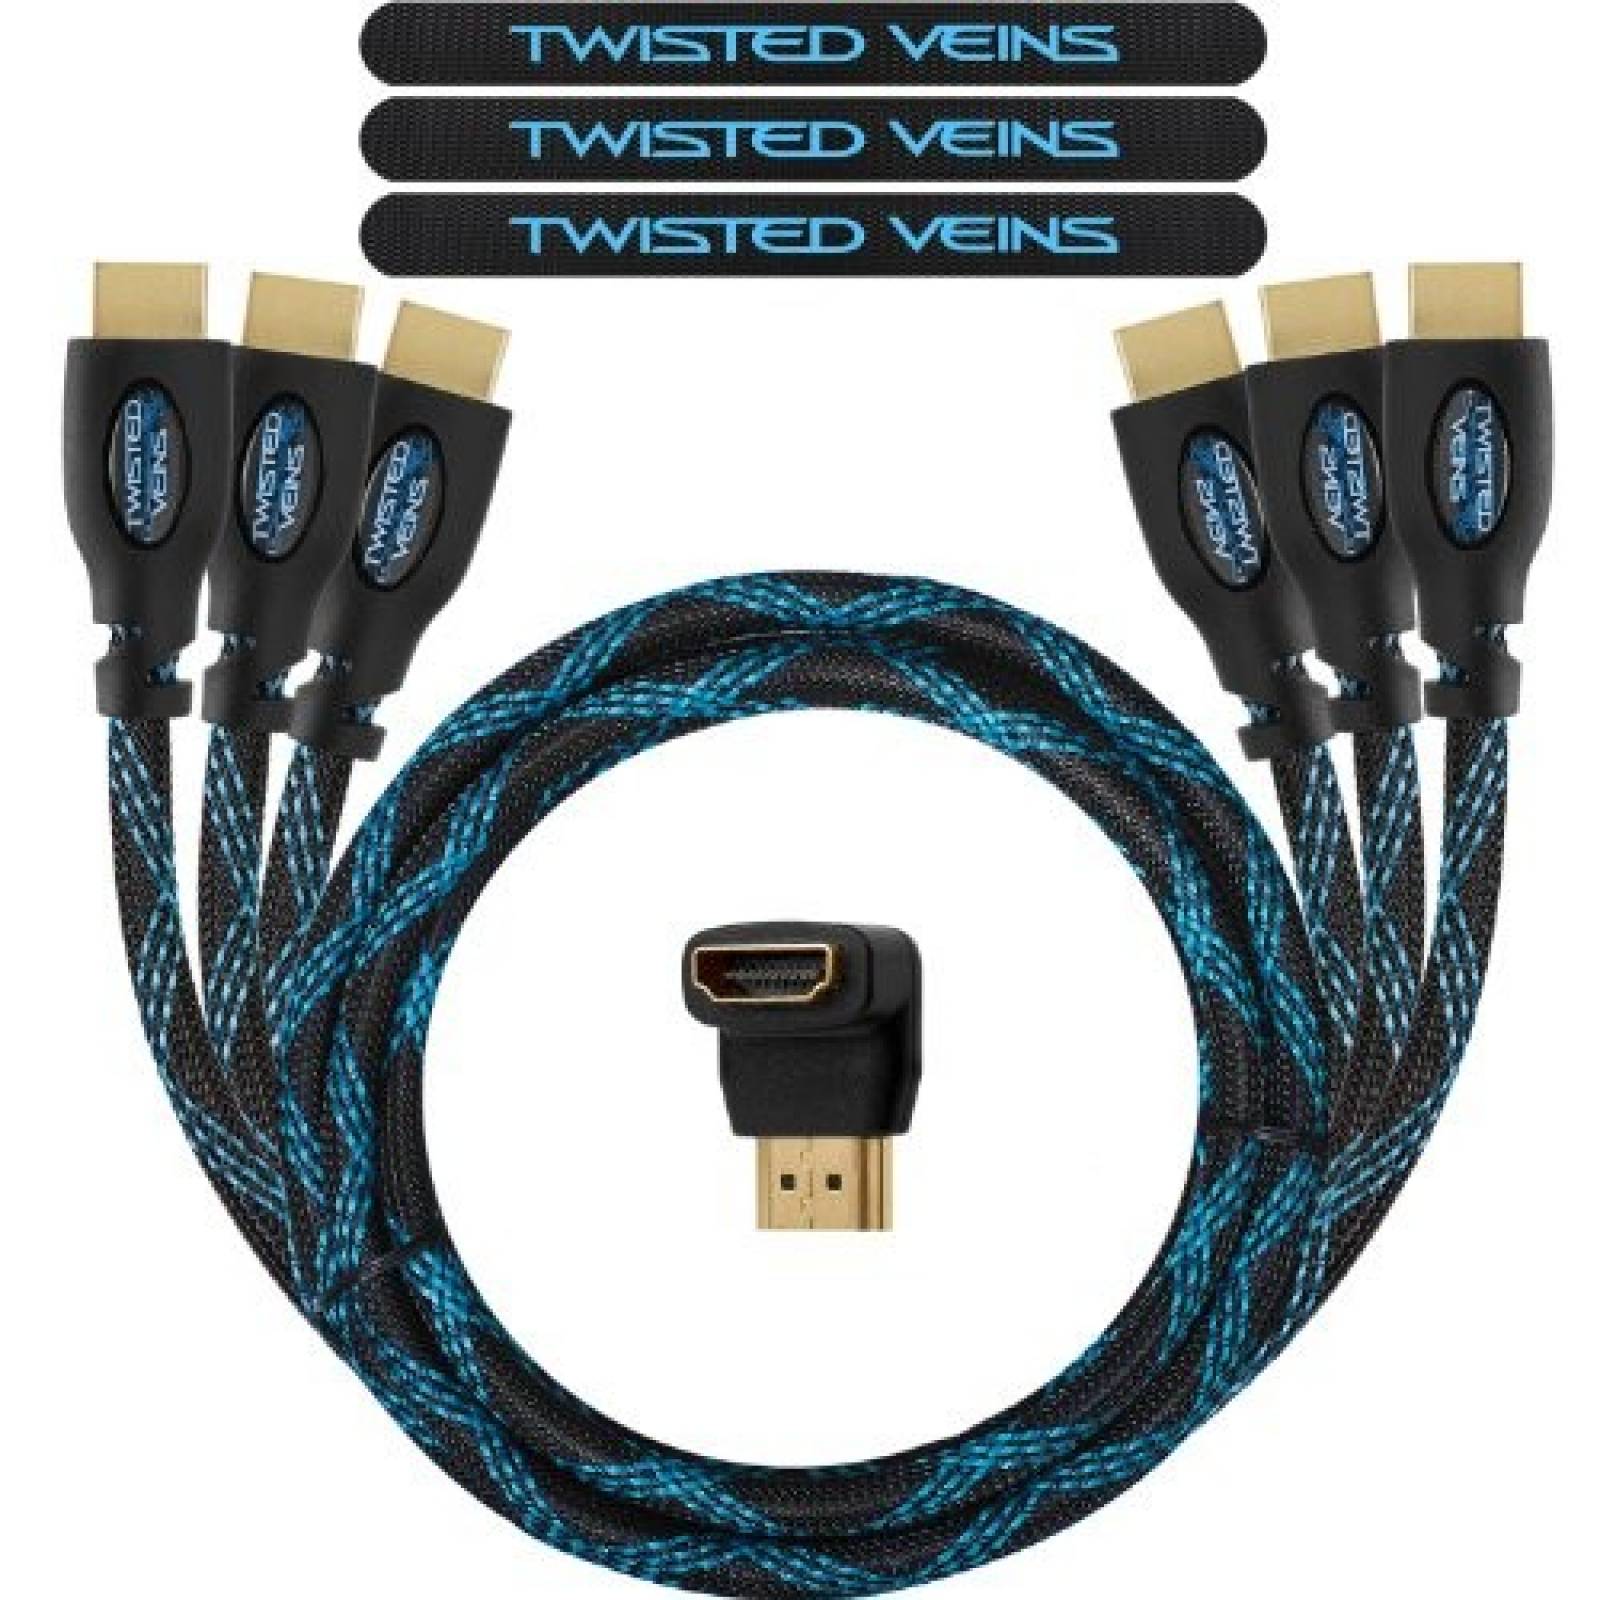 Cable HDMI Twisted Veins alta velocidad 1.4 6 ft 3 Piezas